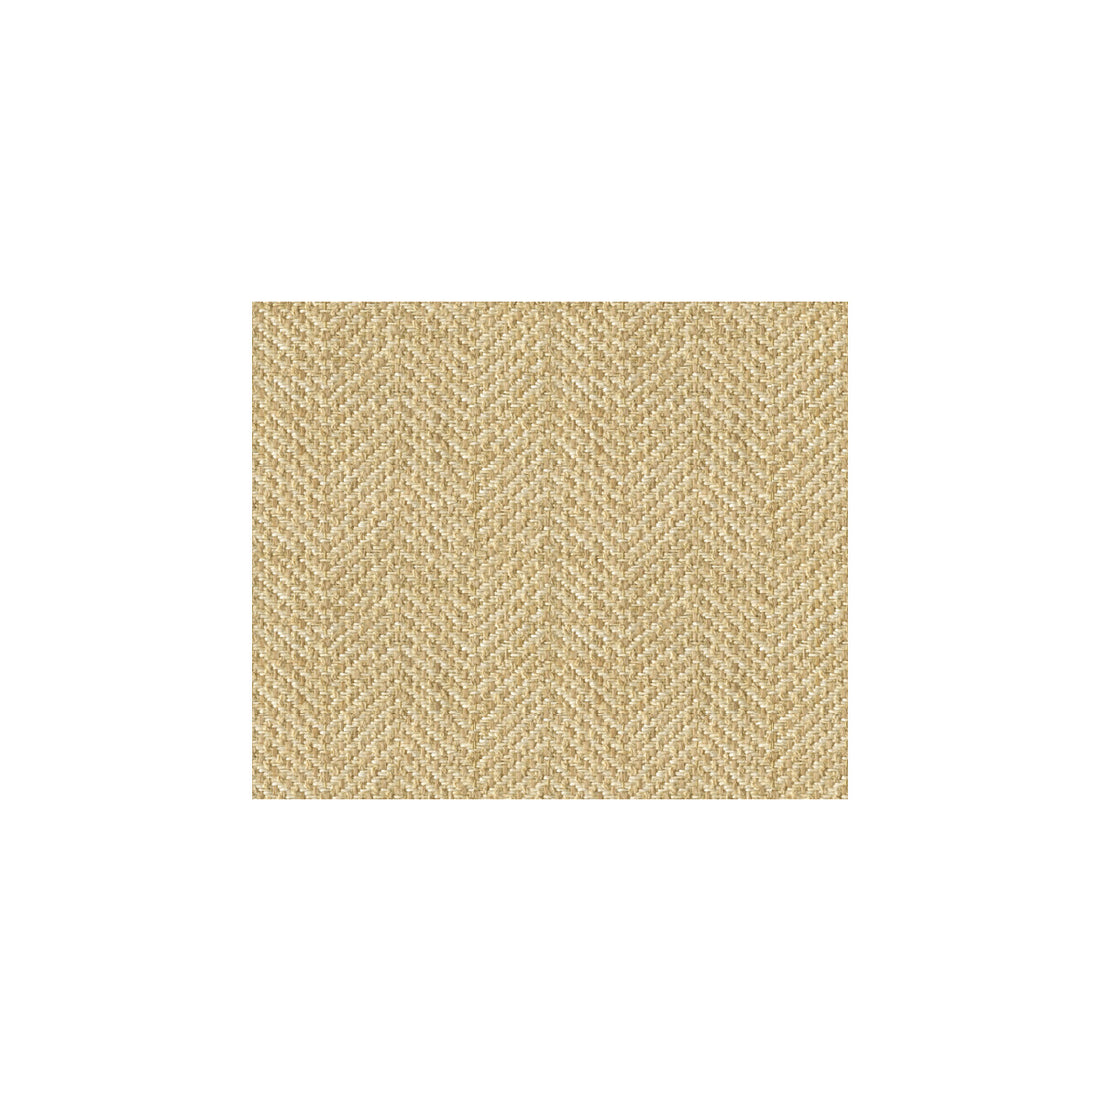 Kravet Smart fabric in 31748-116 color - pattern 31748.116.0 - by Kravet Smart